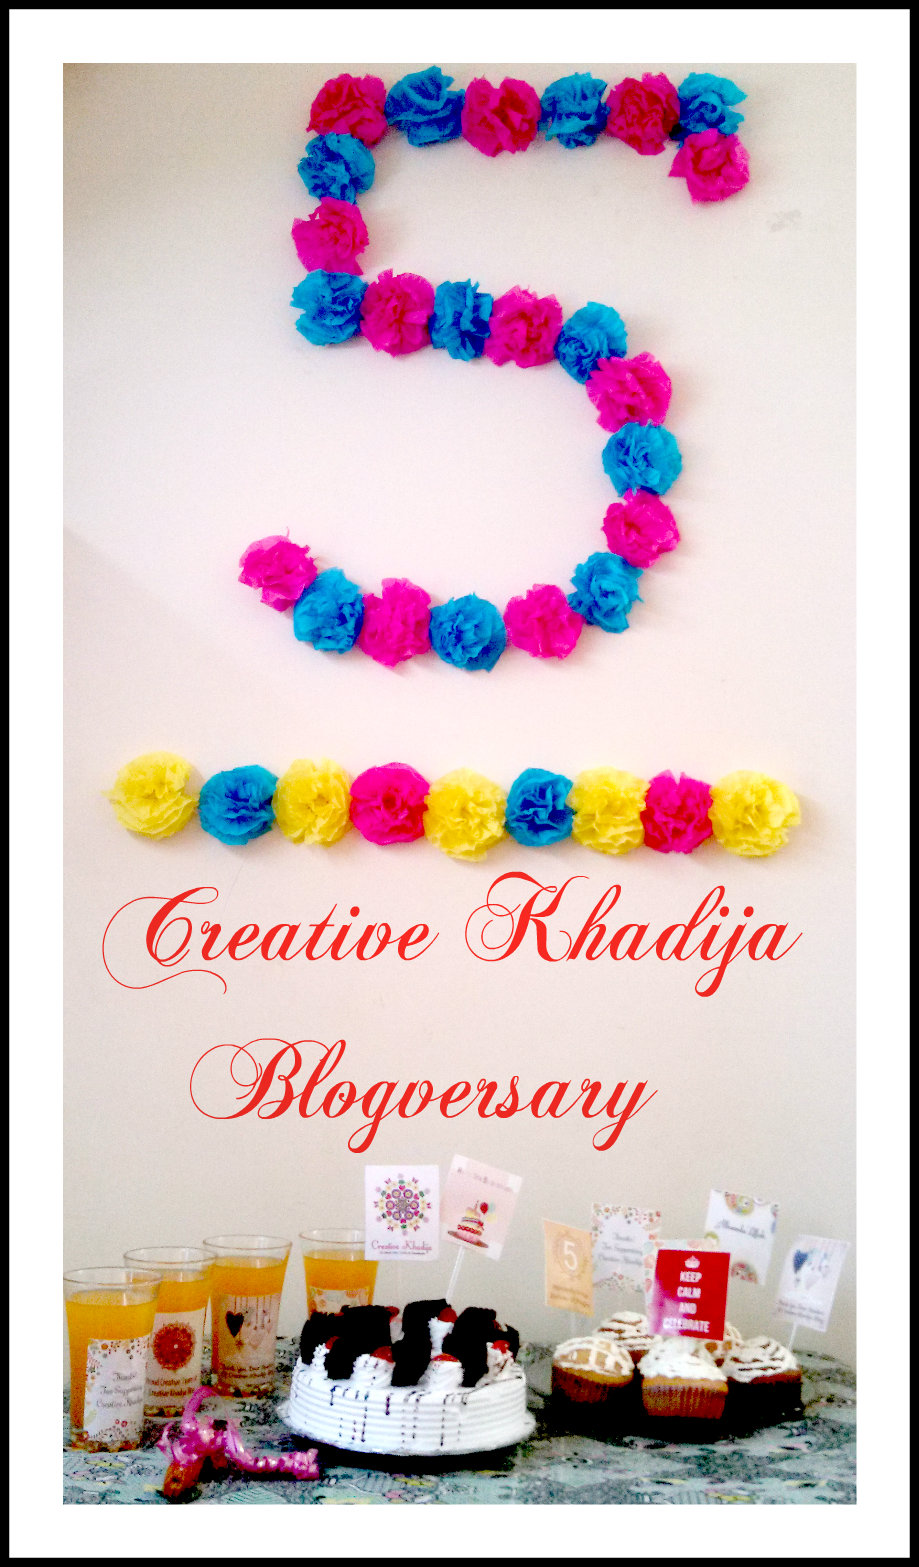 creativekhadija blog birthday blogversary